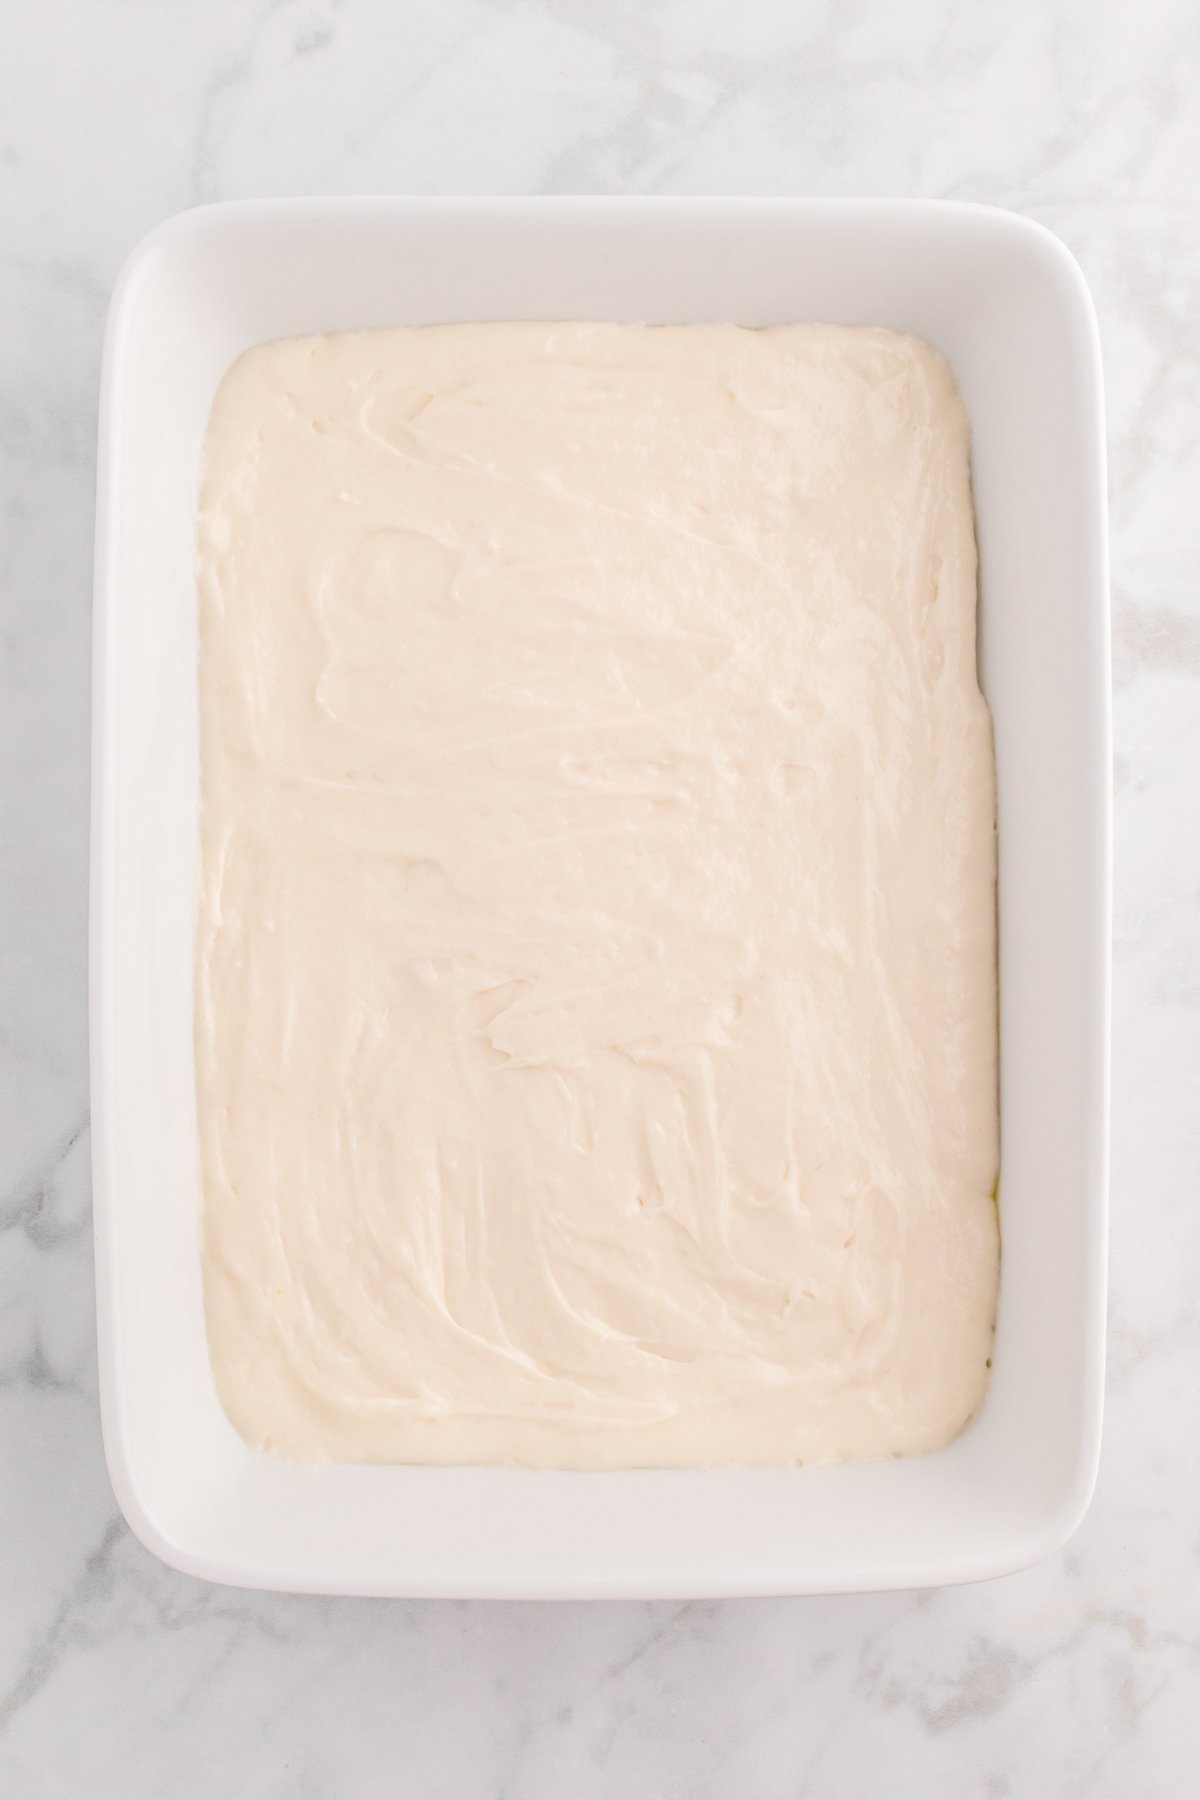 white baking dish with white cake batter